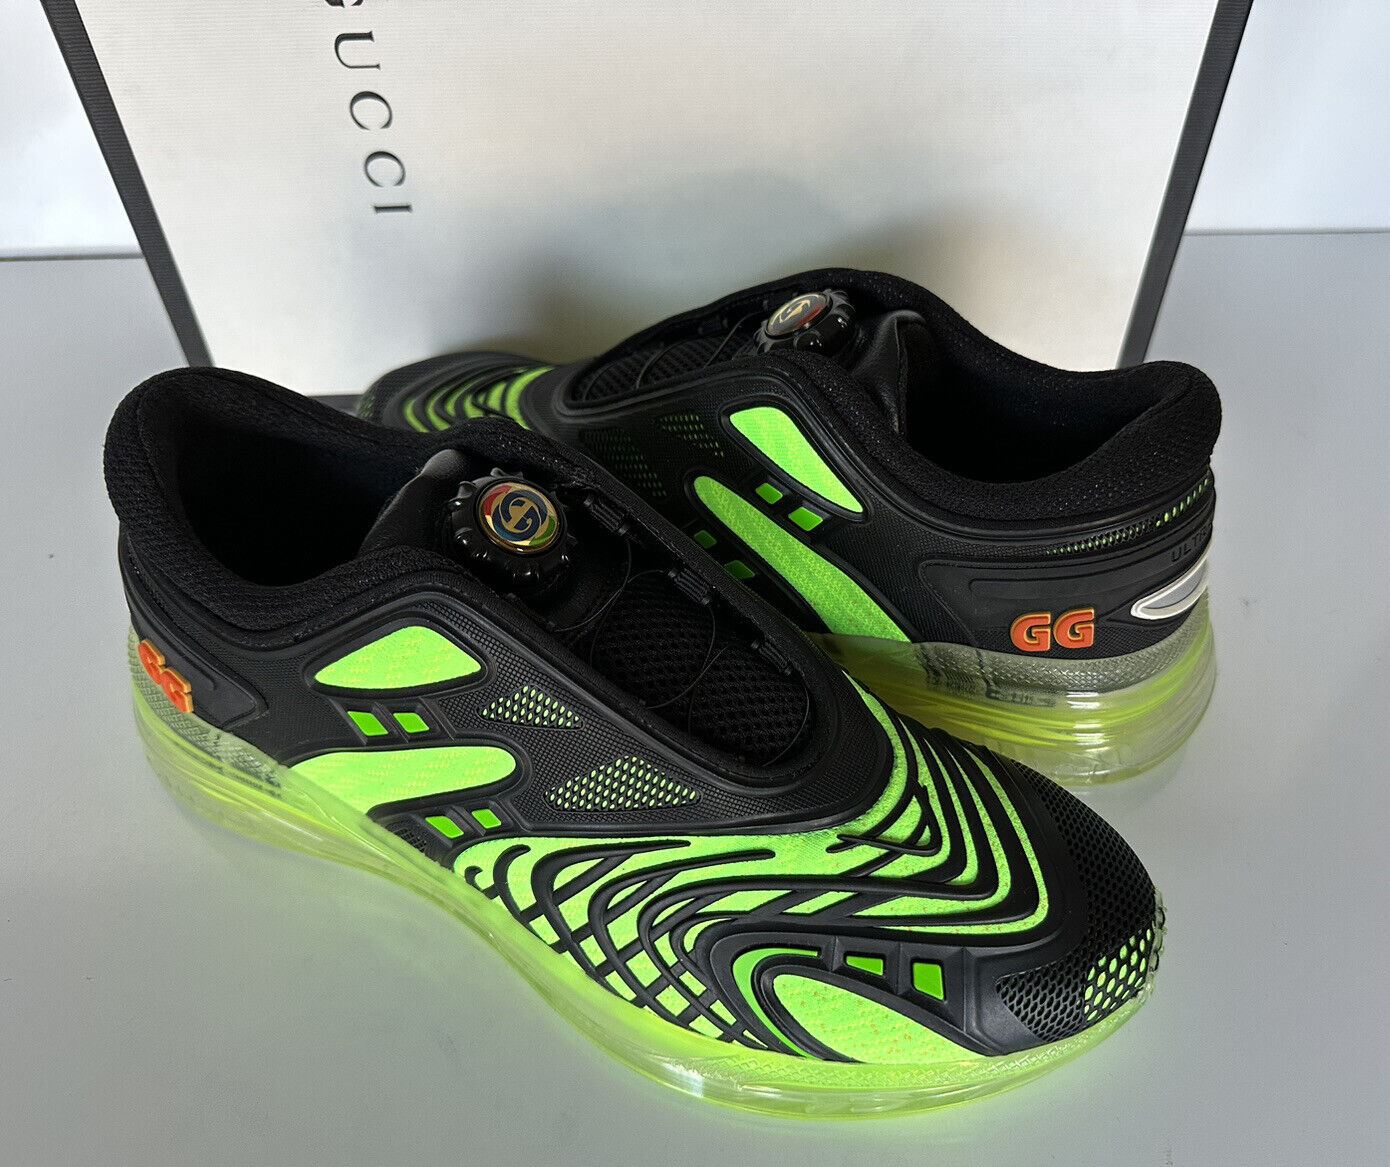 NIB Gucci Ultrapace R Sneakers in Schwarz und Grün 8,5 US (Gucci 8) 620337 IT 